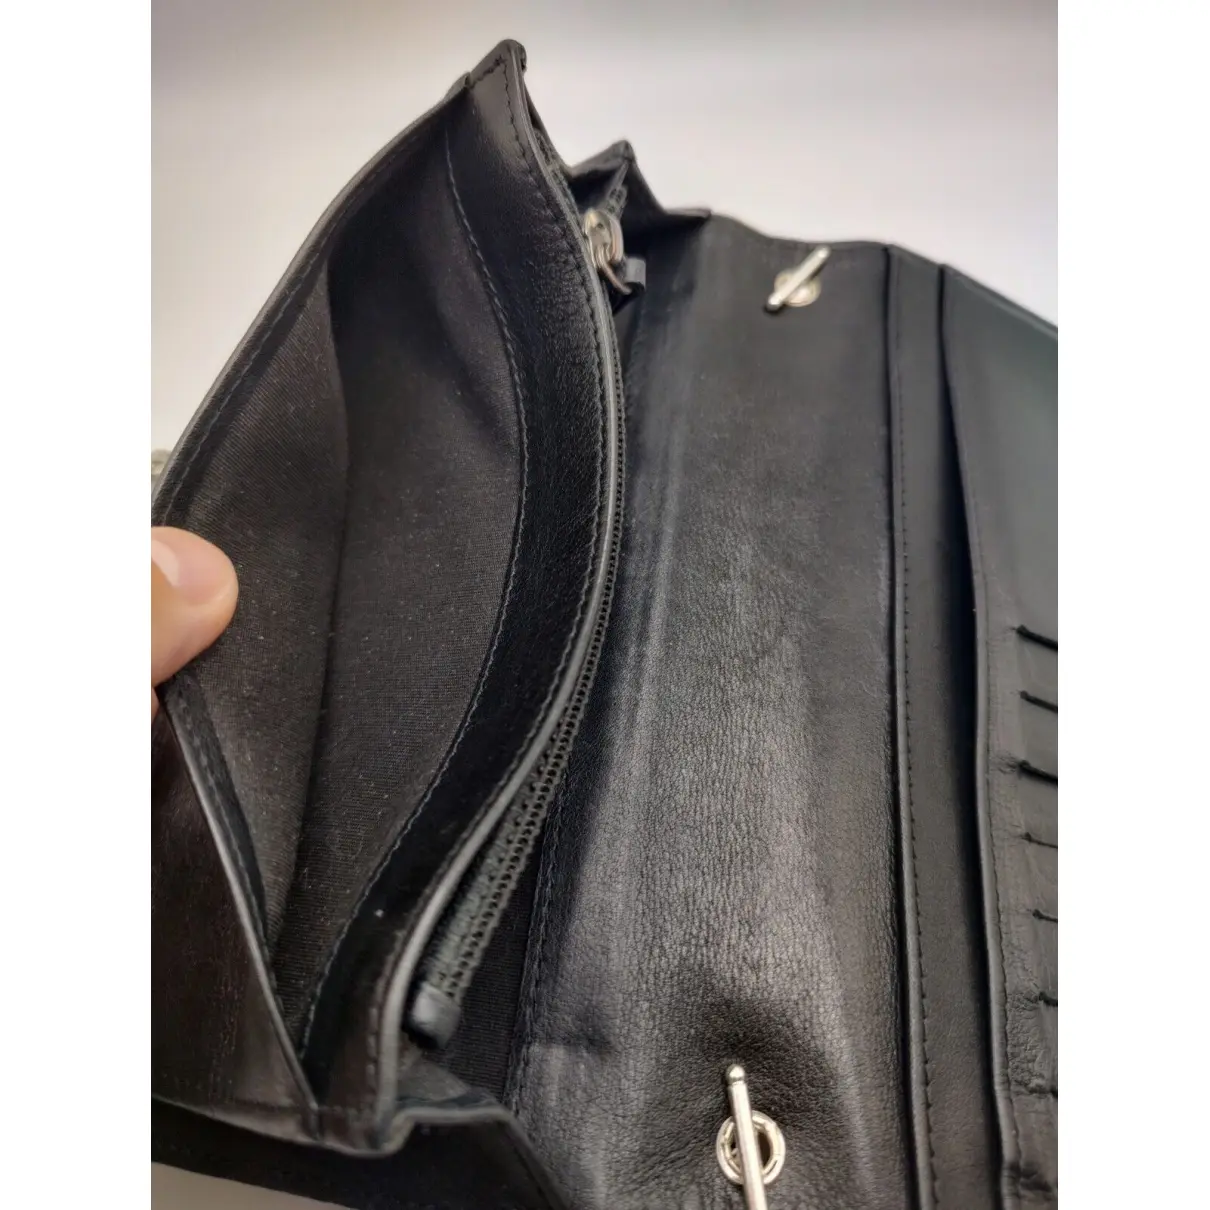 Buy Chanel Wallet On Chain Boy leather crossbody bag online